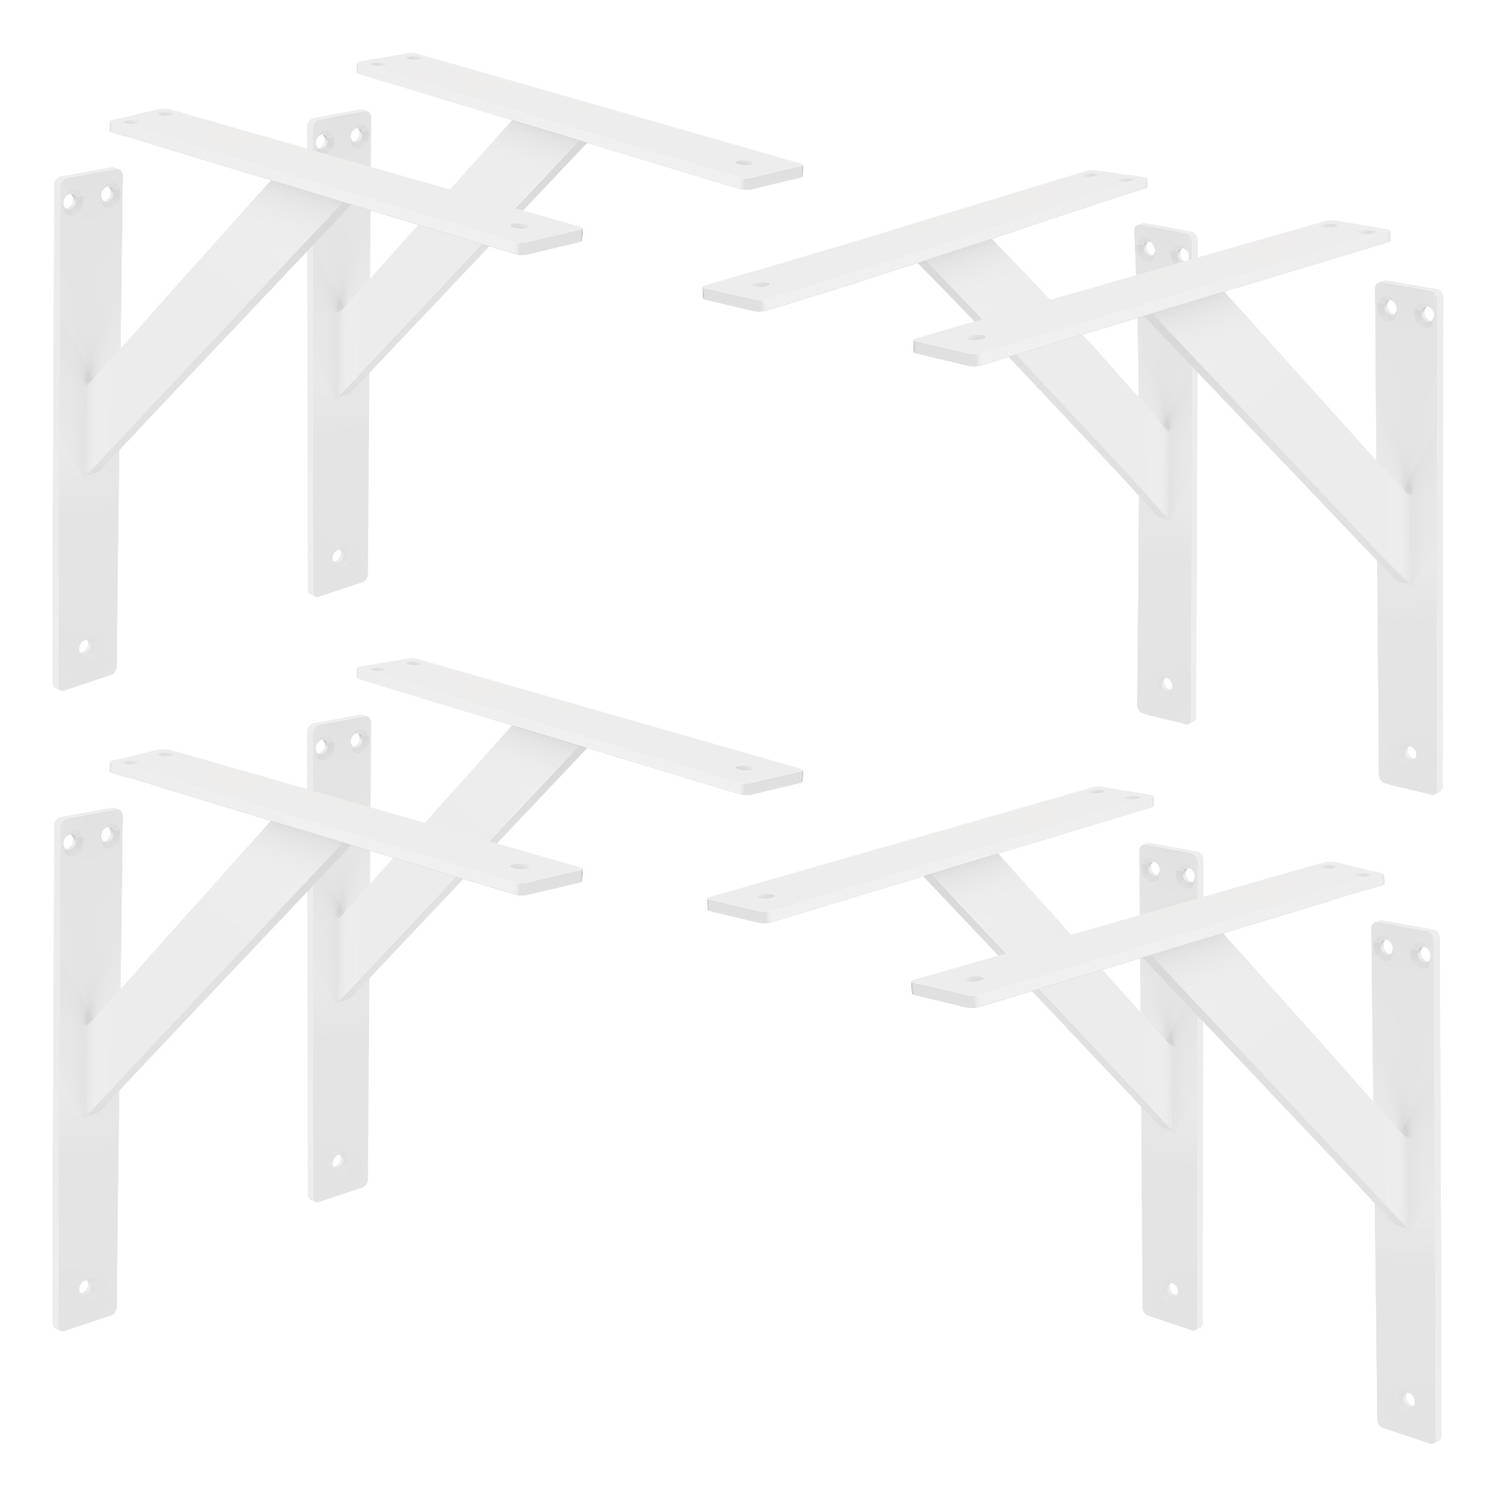 ML-Design 8 stuks plankdrager 240x240 mm, wit, aluminium, zwevende plankdrager, plankdrager, wanddrager voor plankdrager, plankdrager voor wandmontage, wandplankdrager plankdrager